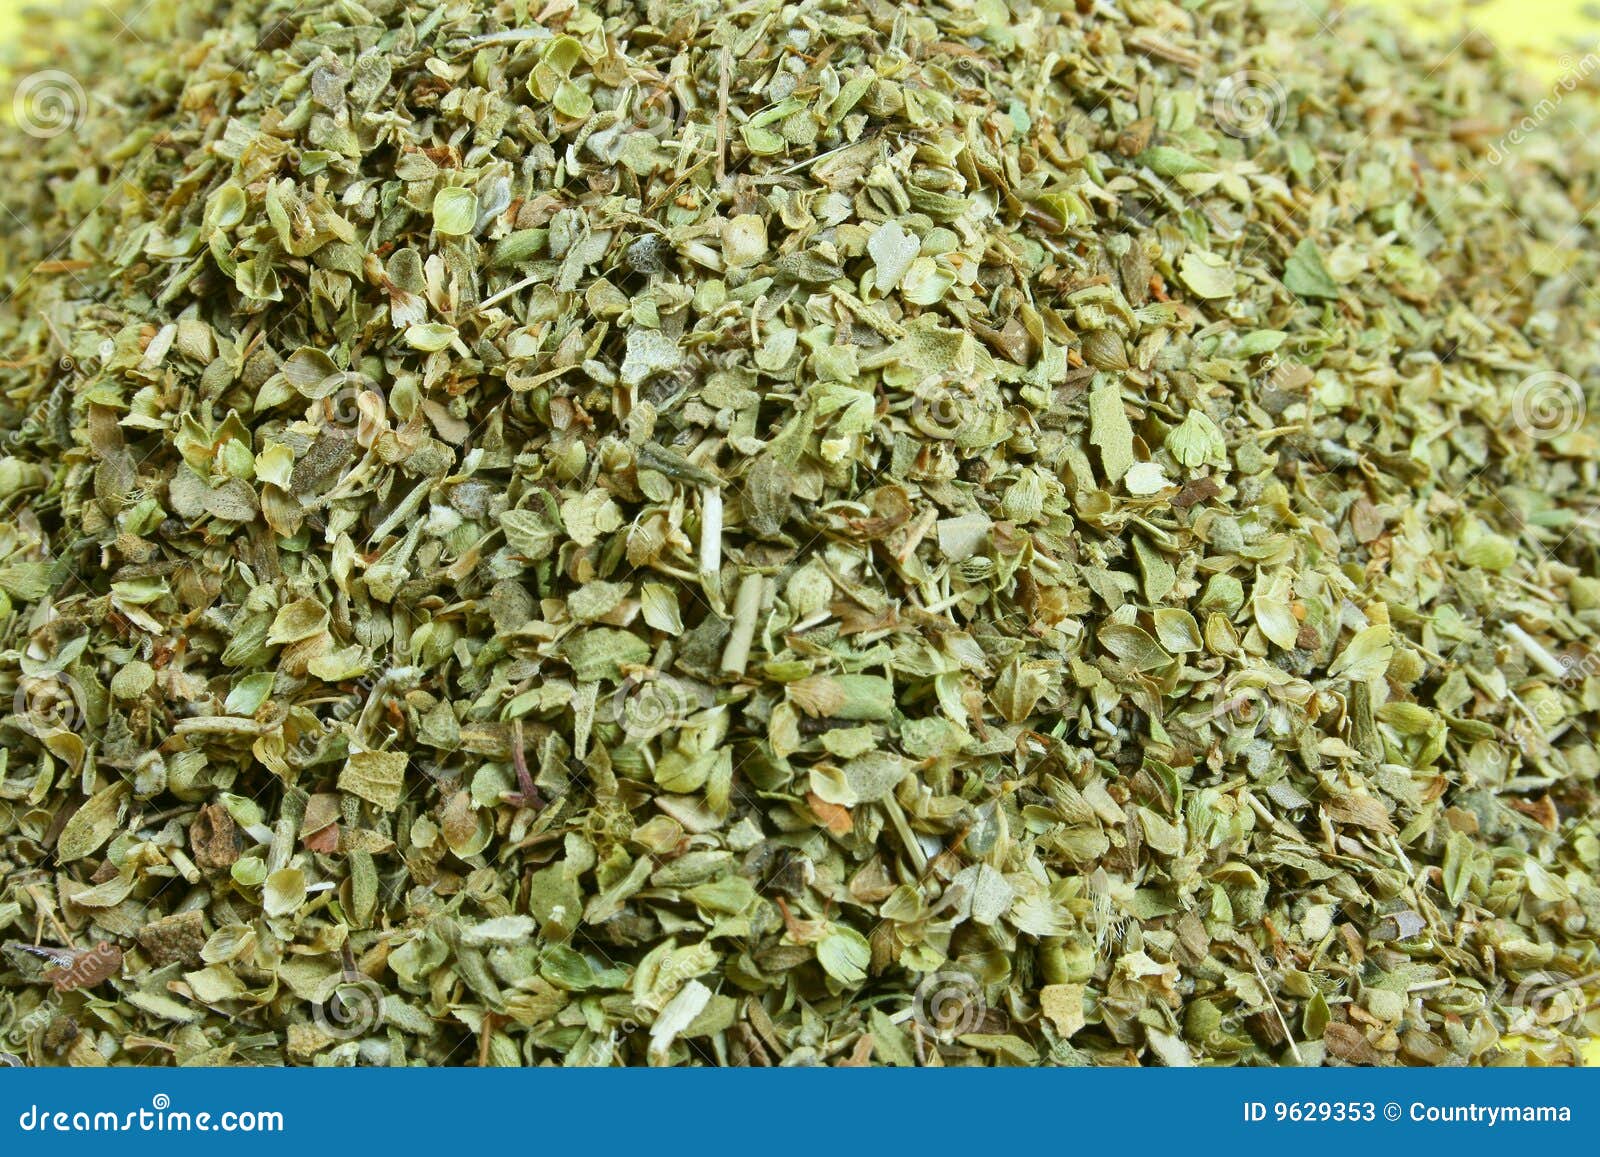 Oregano stock image. Image of dried, seasoning, green ...